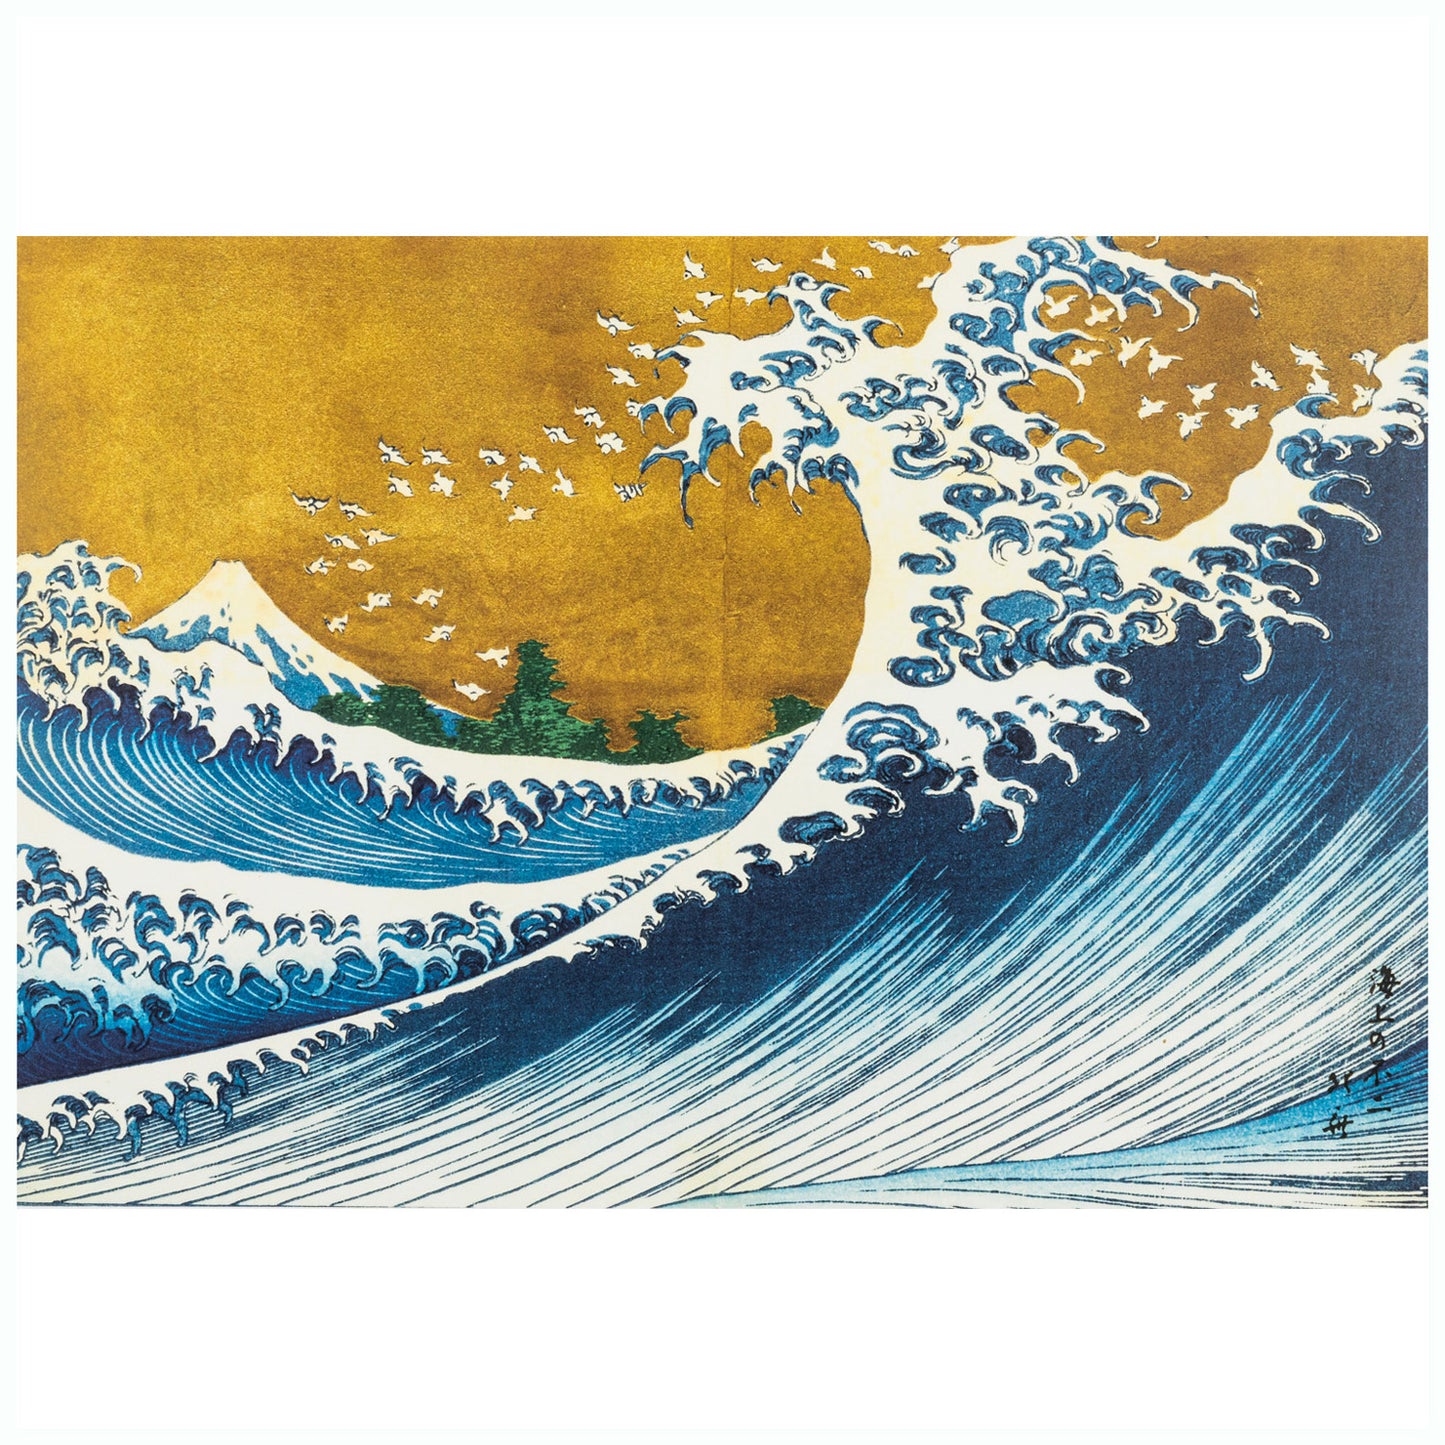 The Big Wave Japanese Print